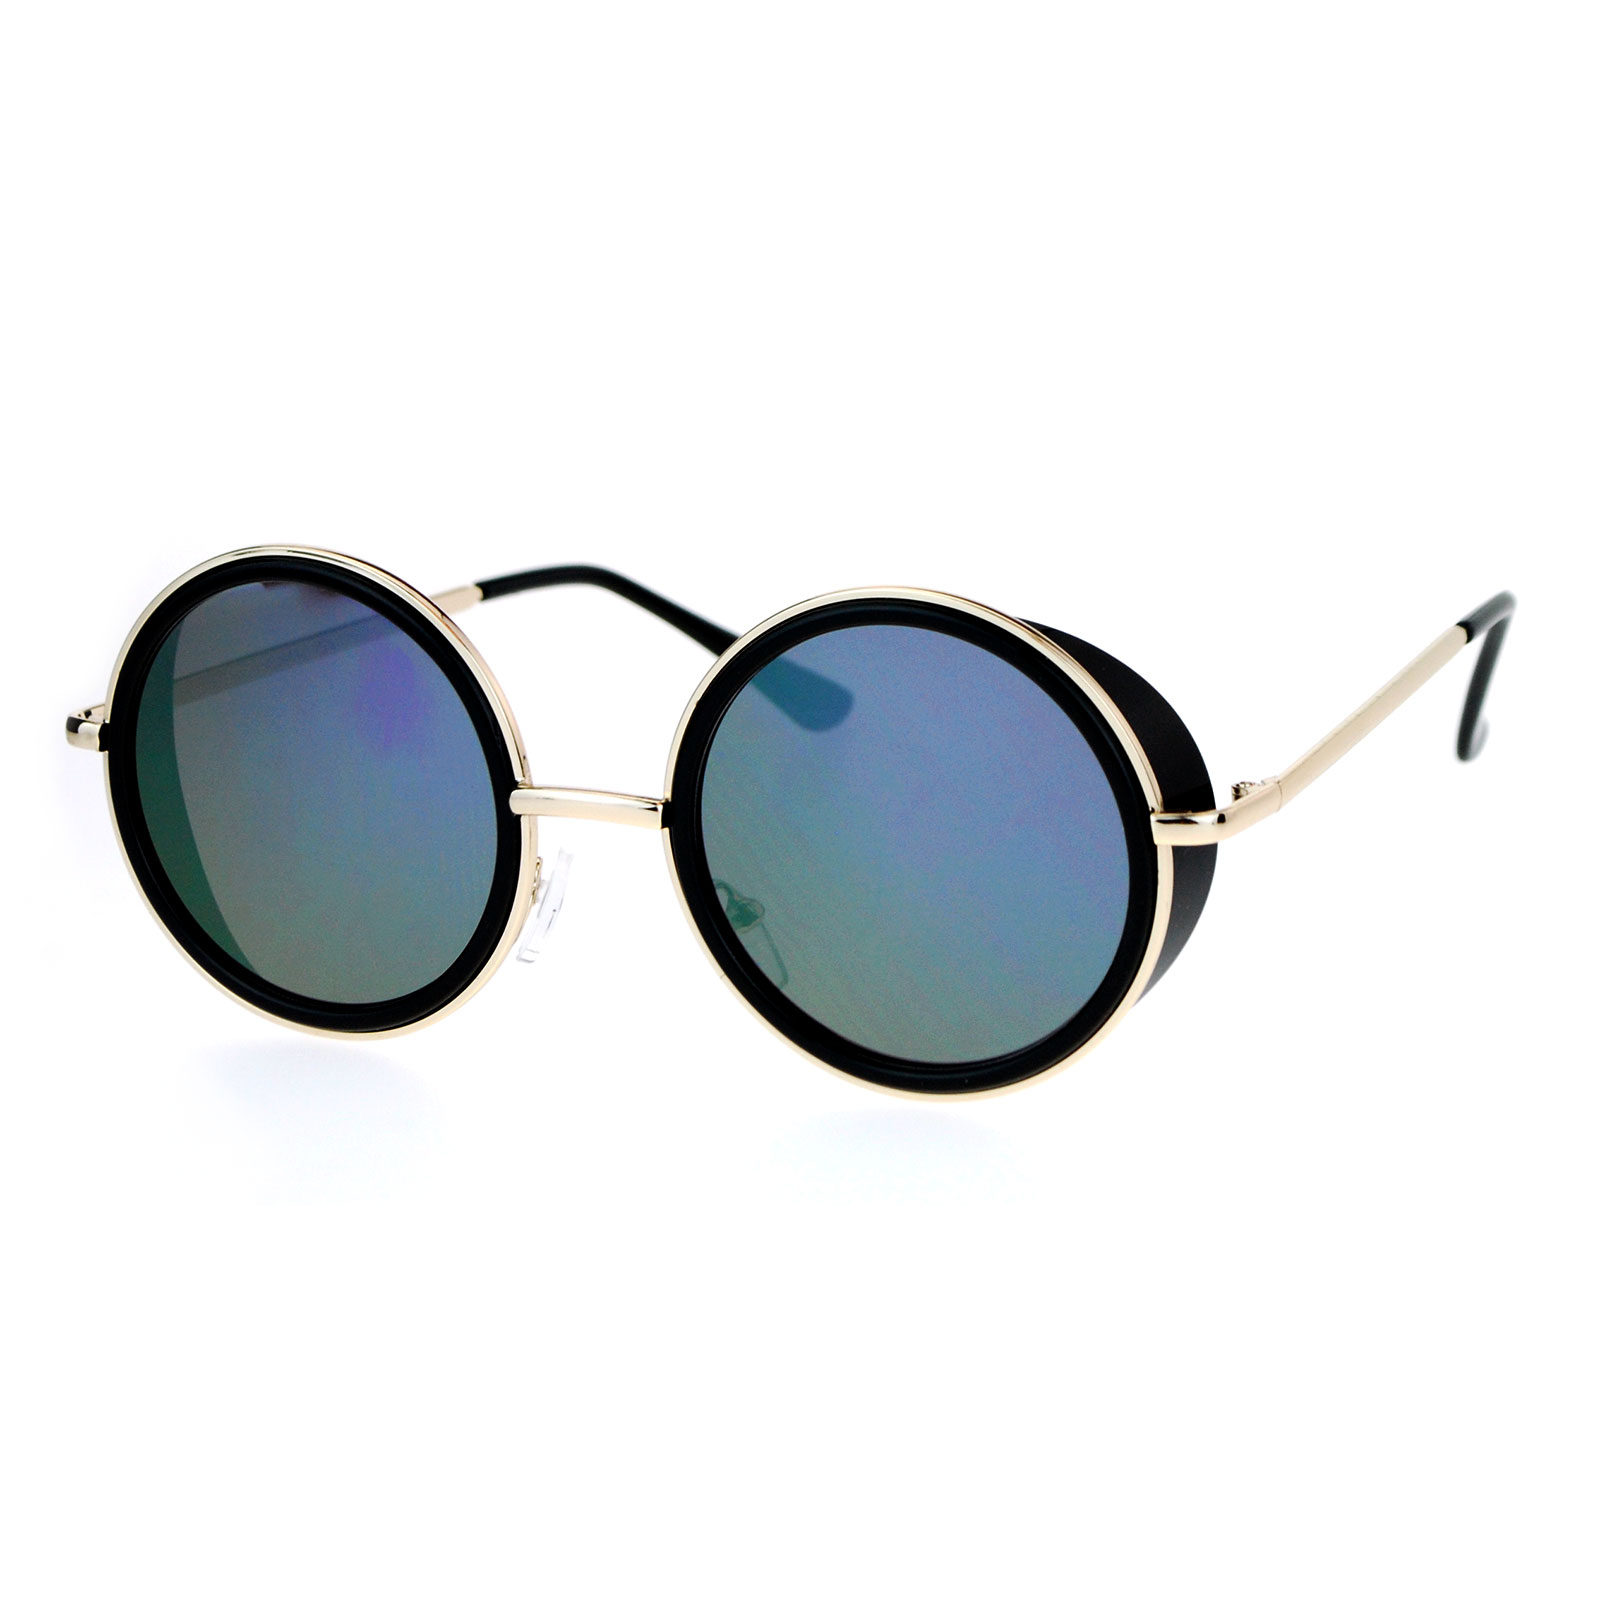 Sa106 Side Visor Hippie Round Circle Lens Sunglasses Ebay